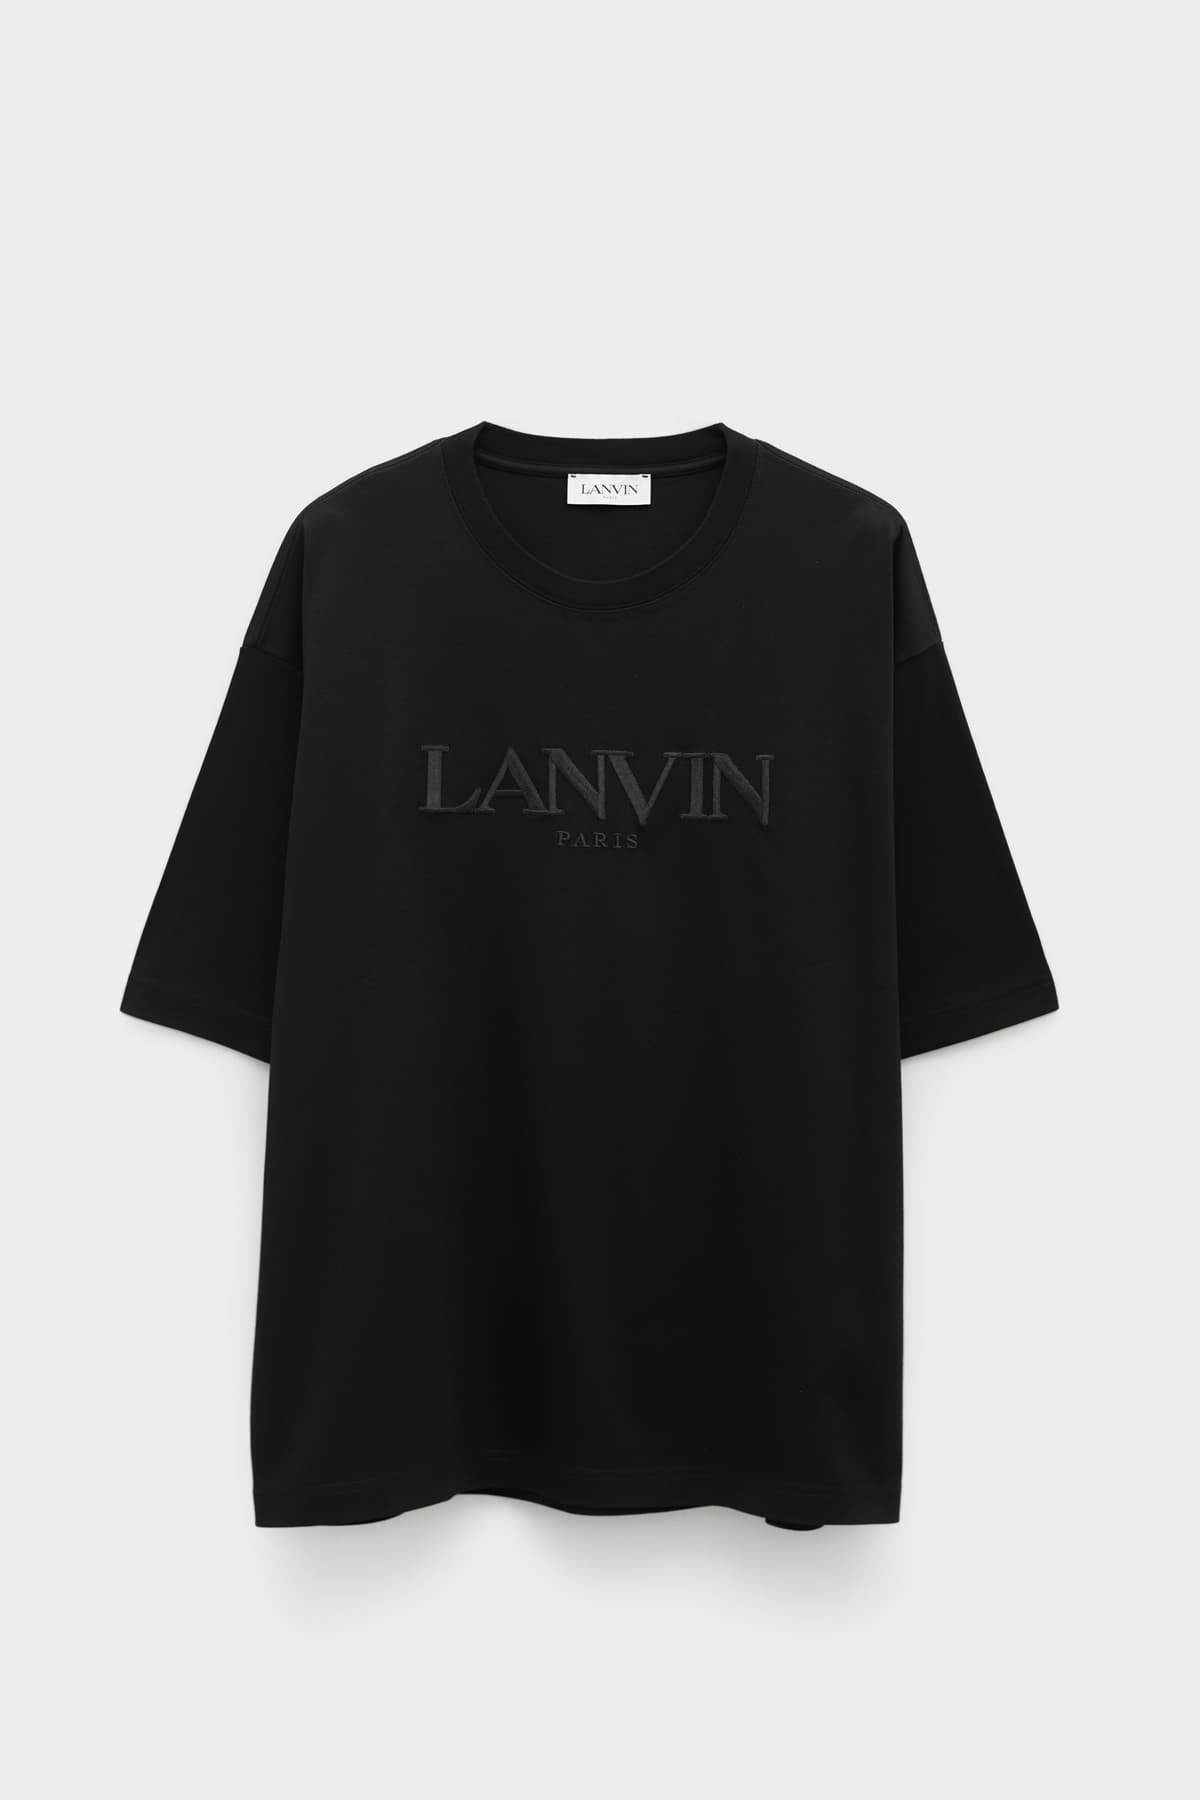 LANVIN BLACK CLASSIC EMBRODERY LOGO T-SHIRT IAMNUE